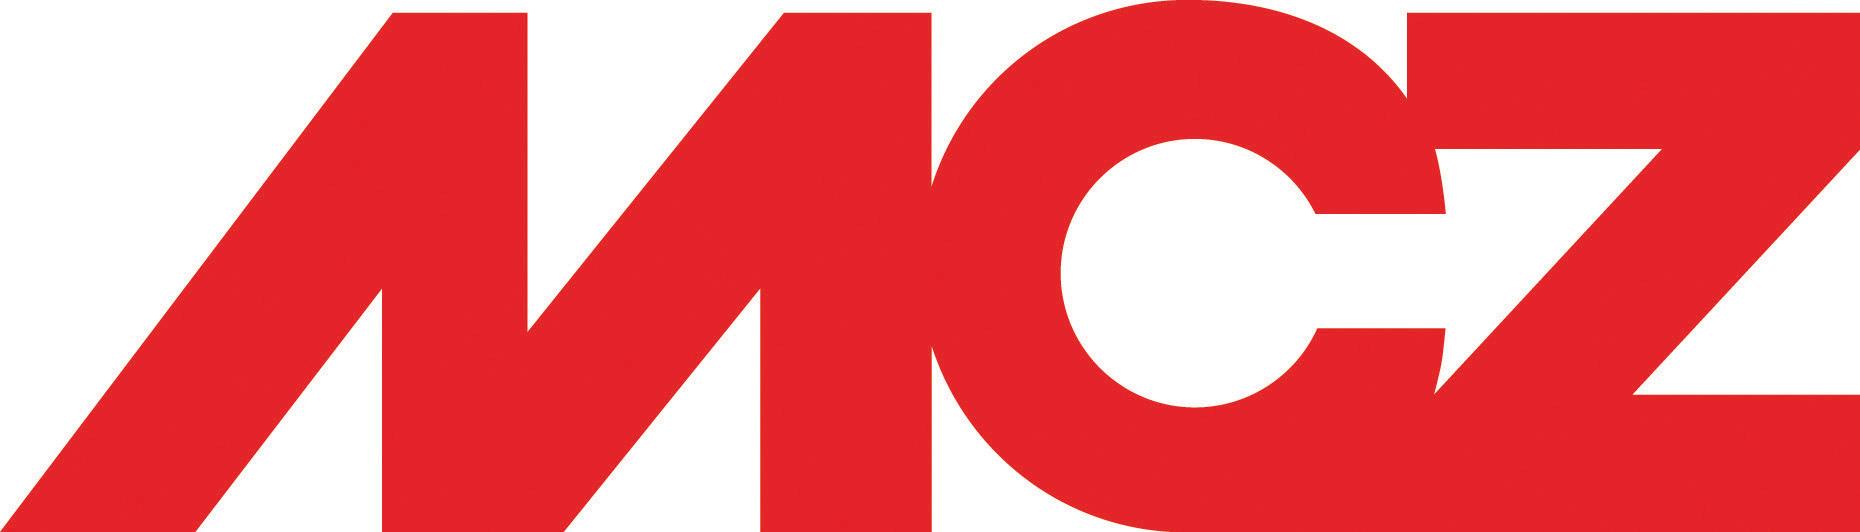 MCZ_logo.jpg